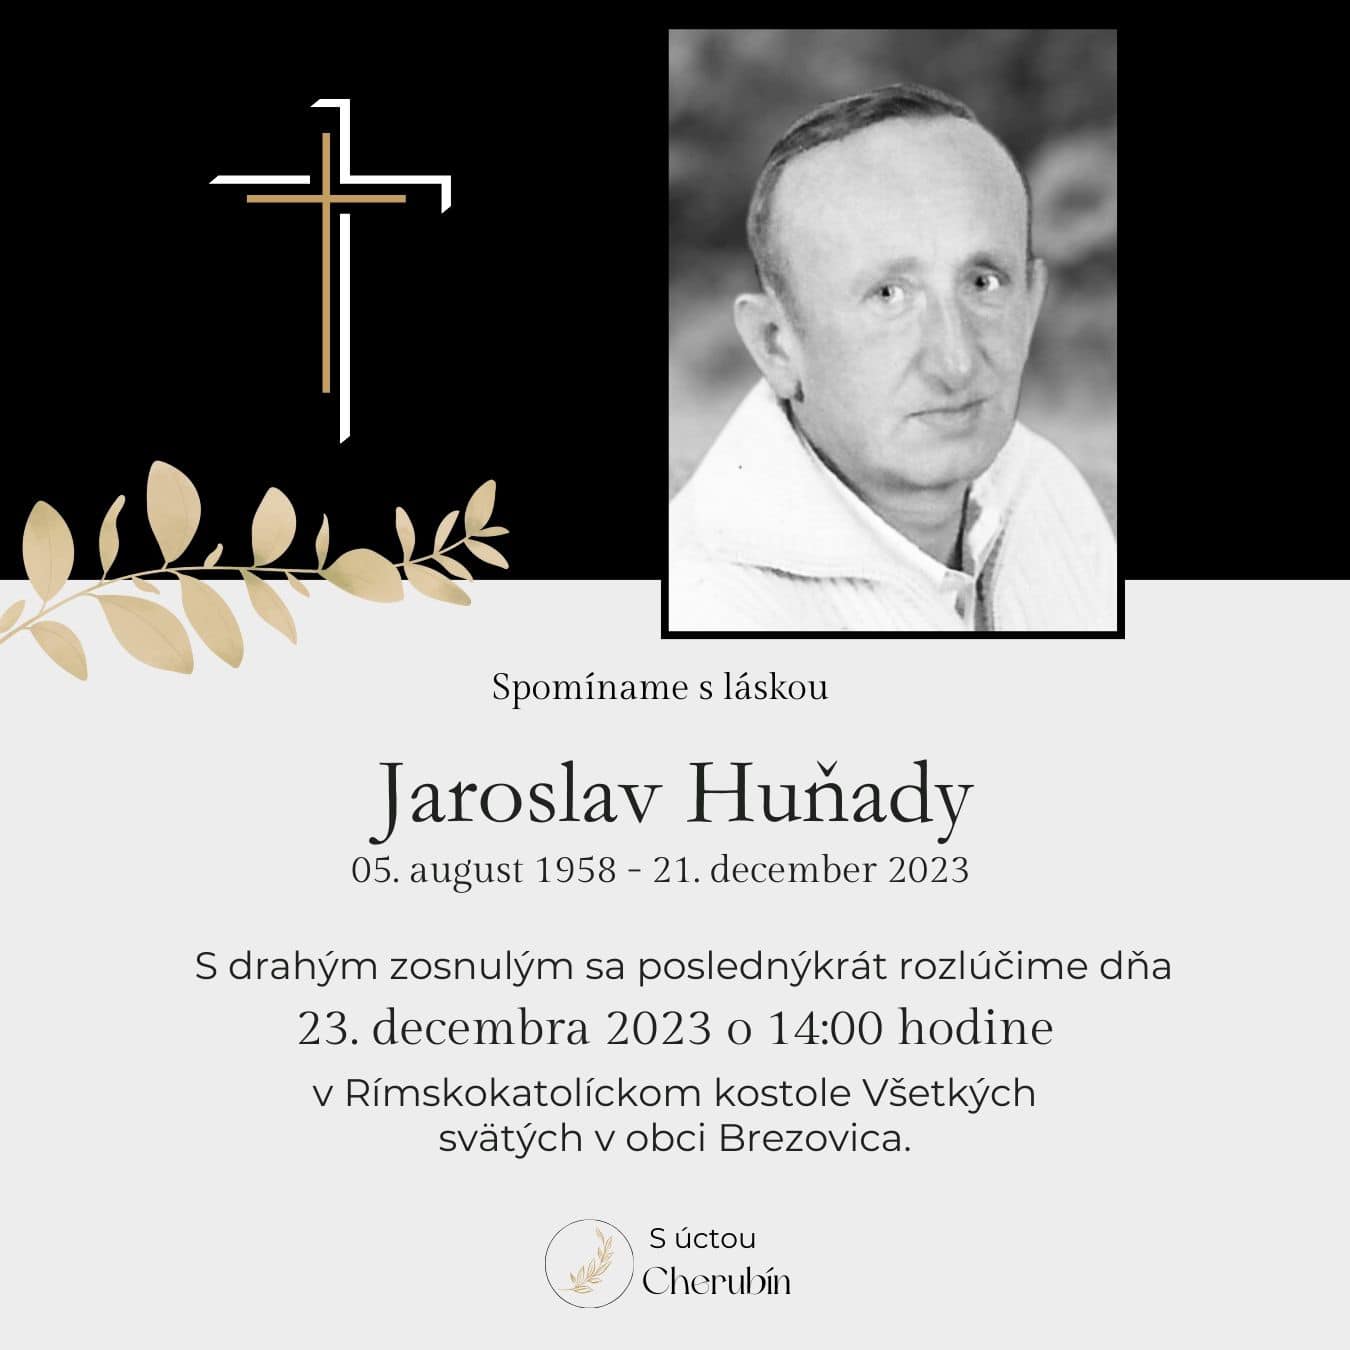 Jaroslav Huňady